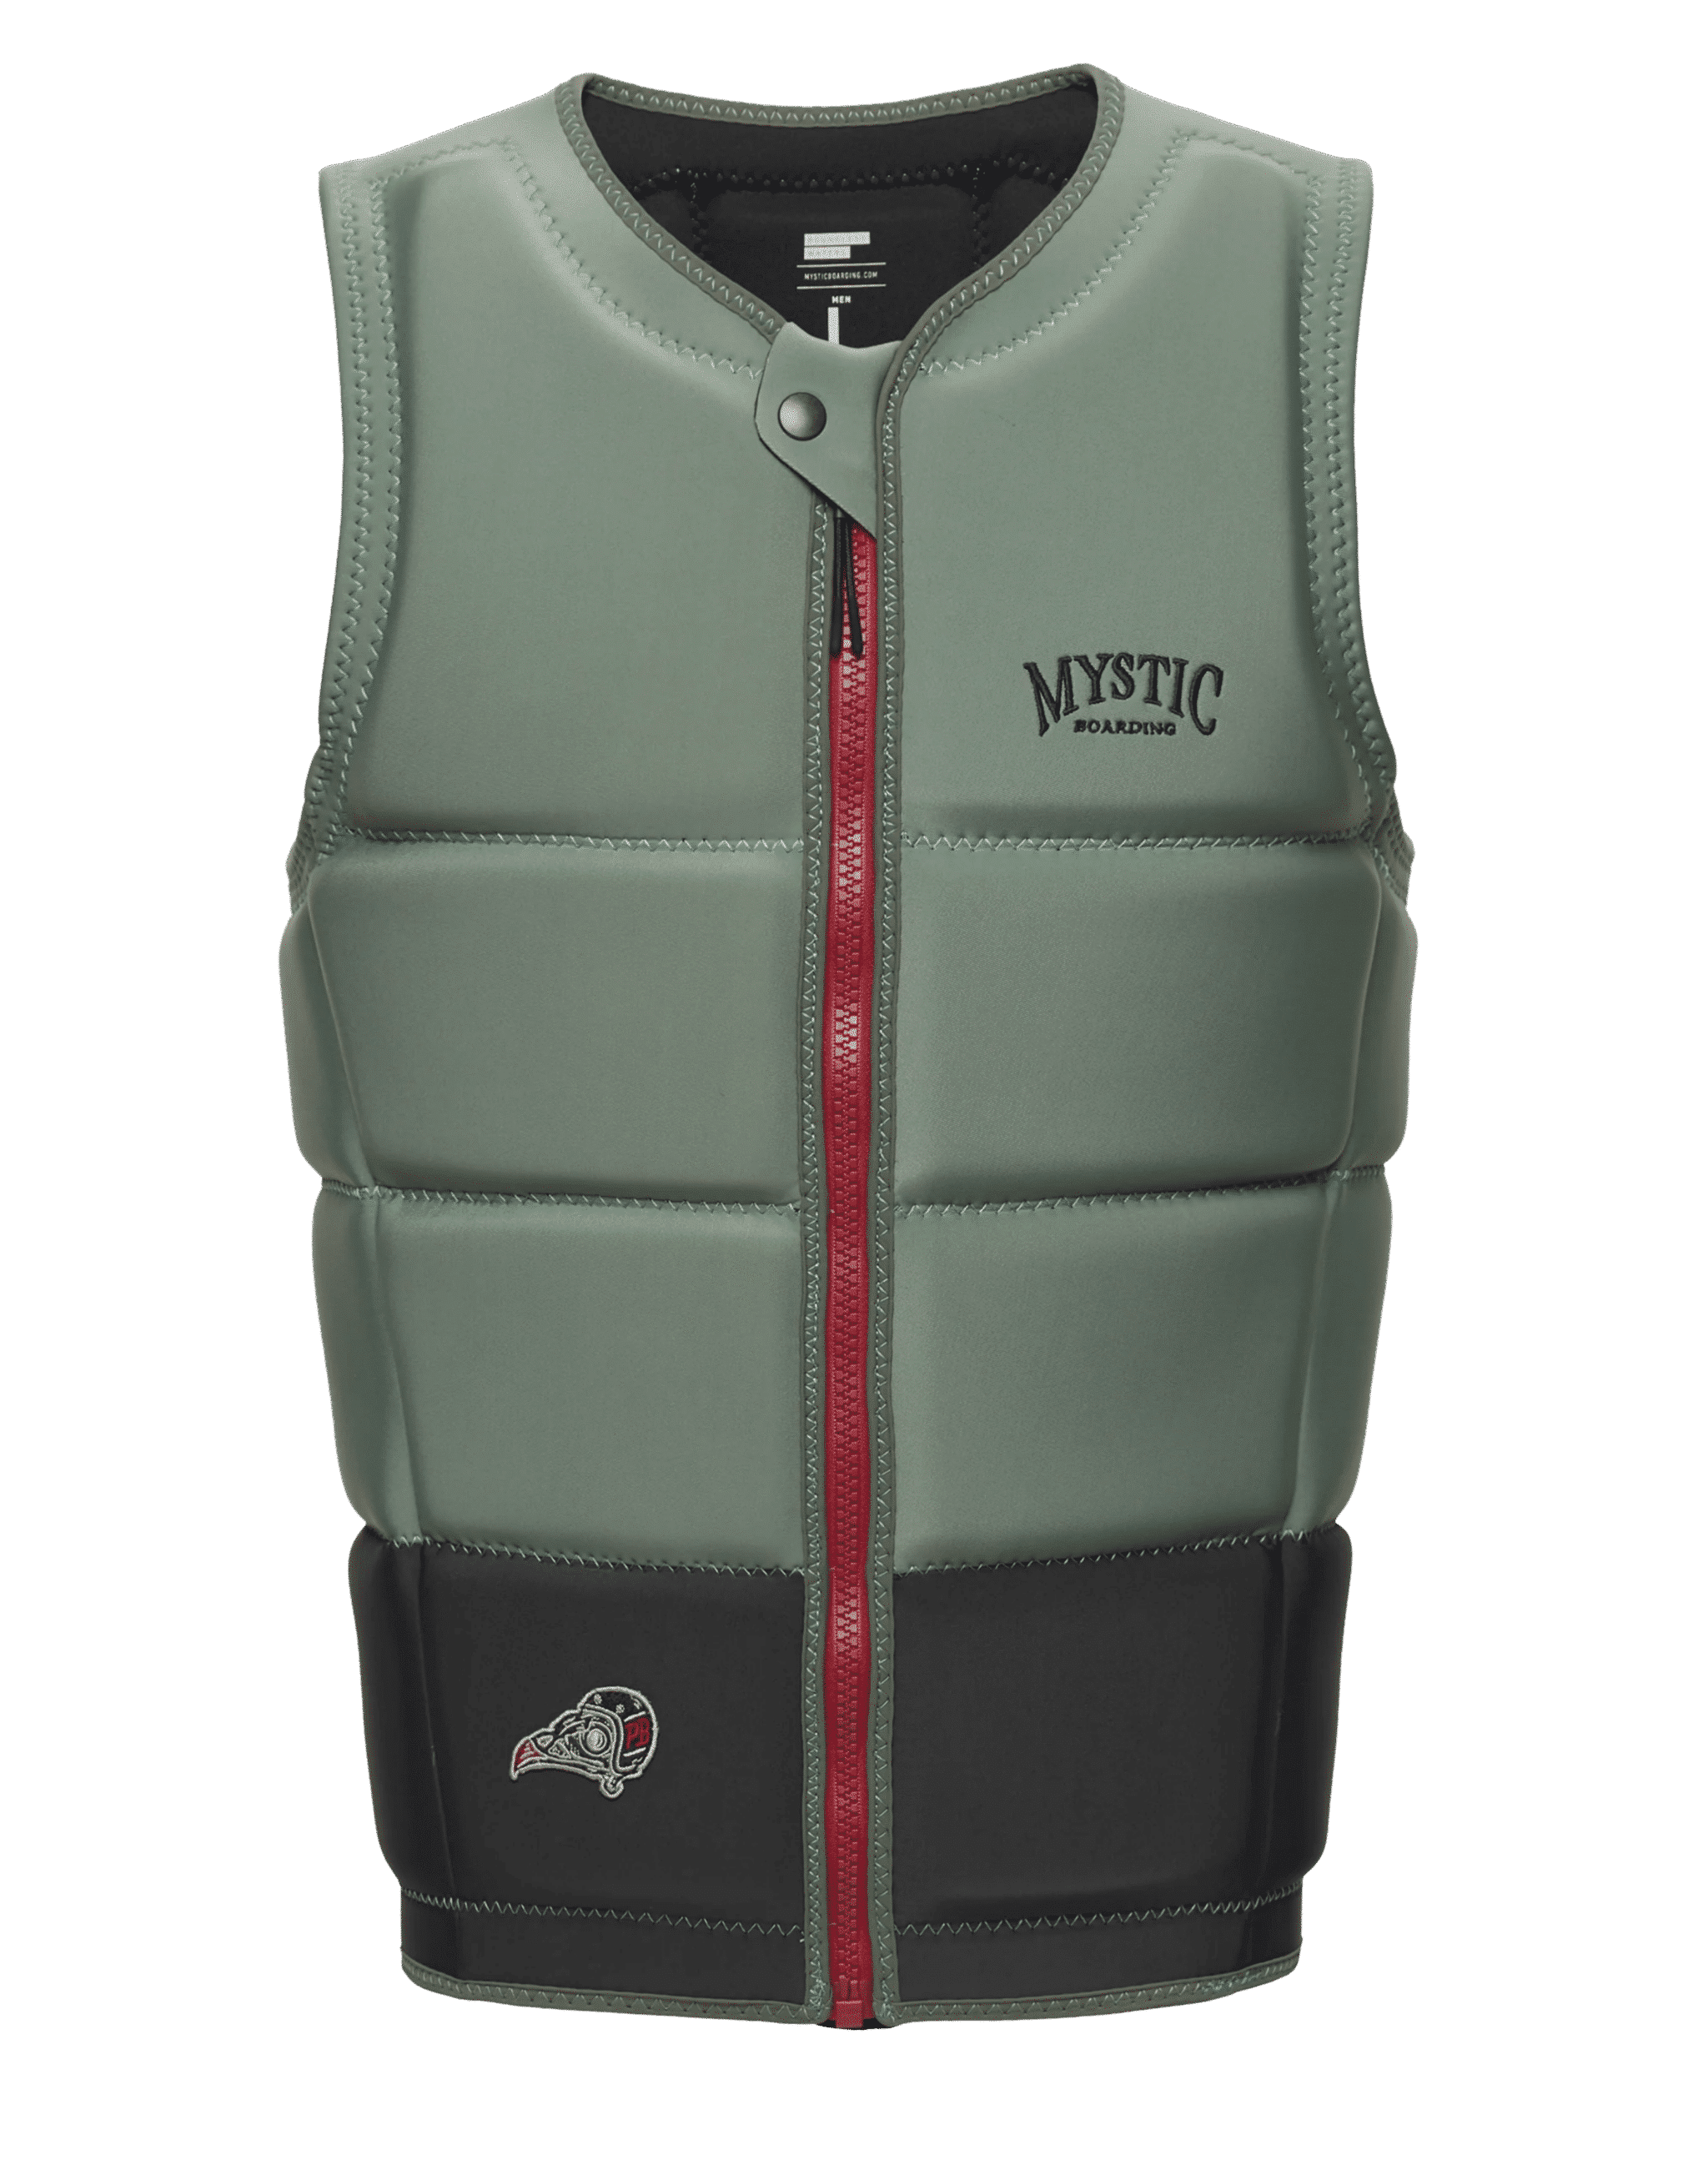 Mystic Peacock Impact Vest Frontzip